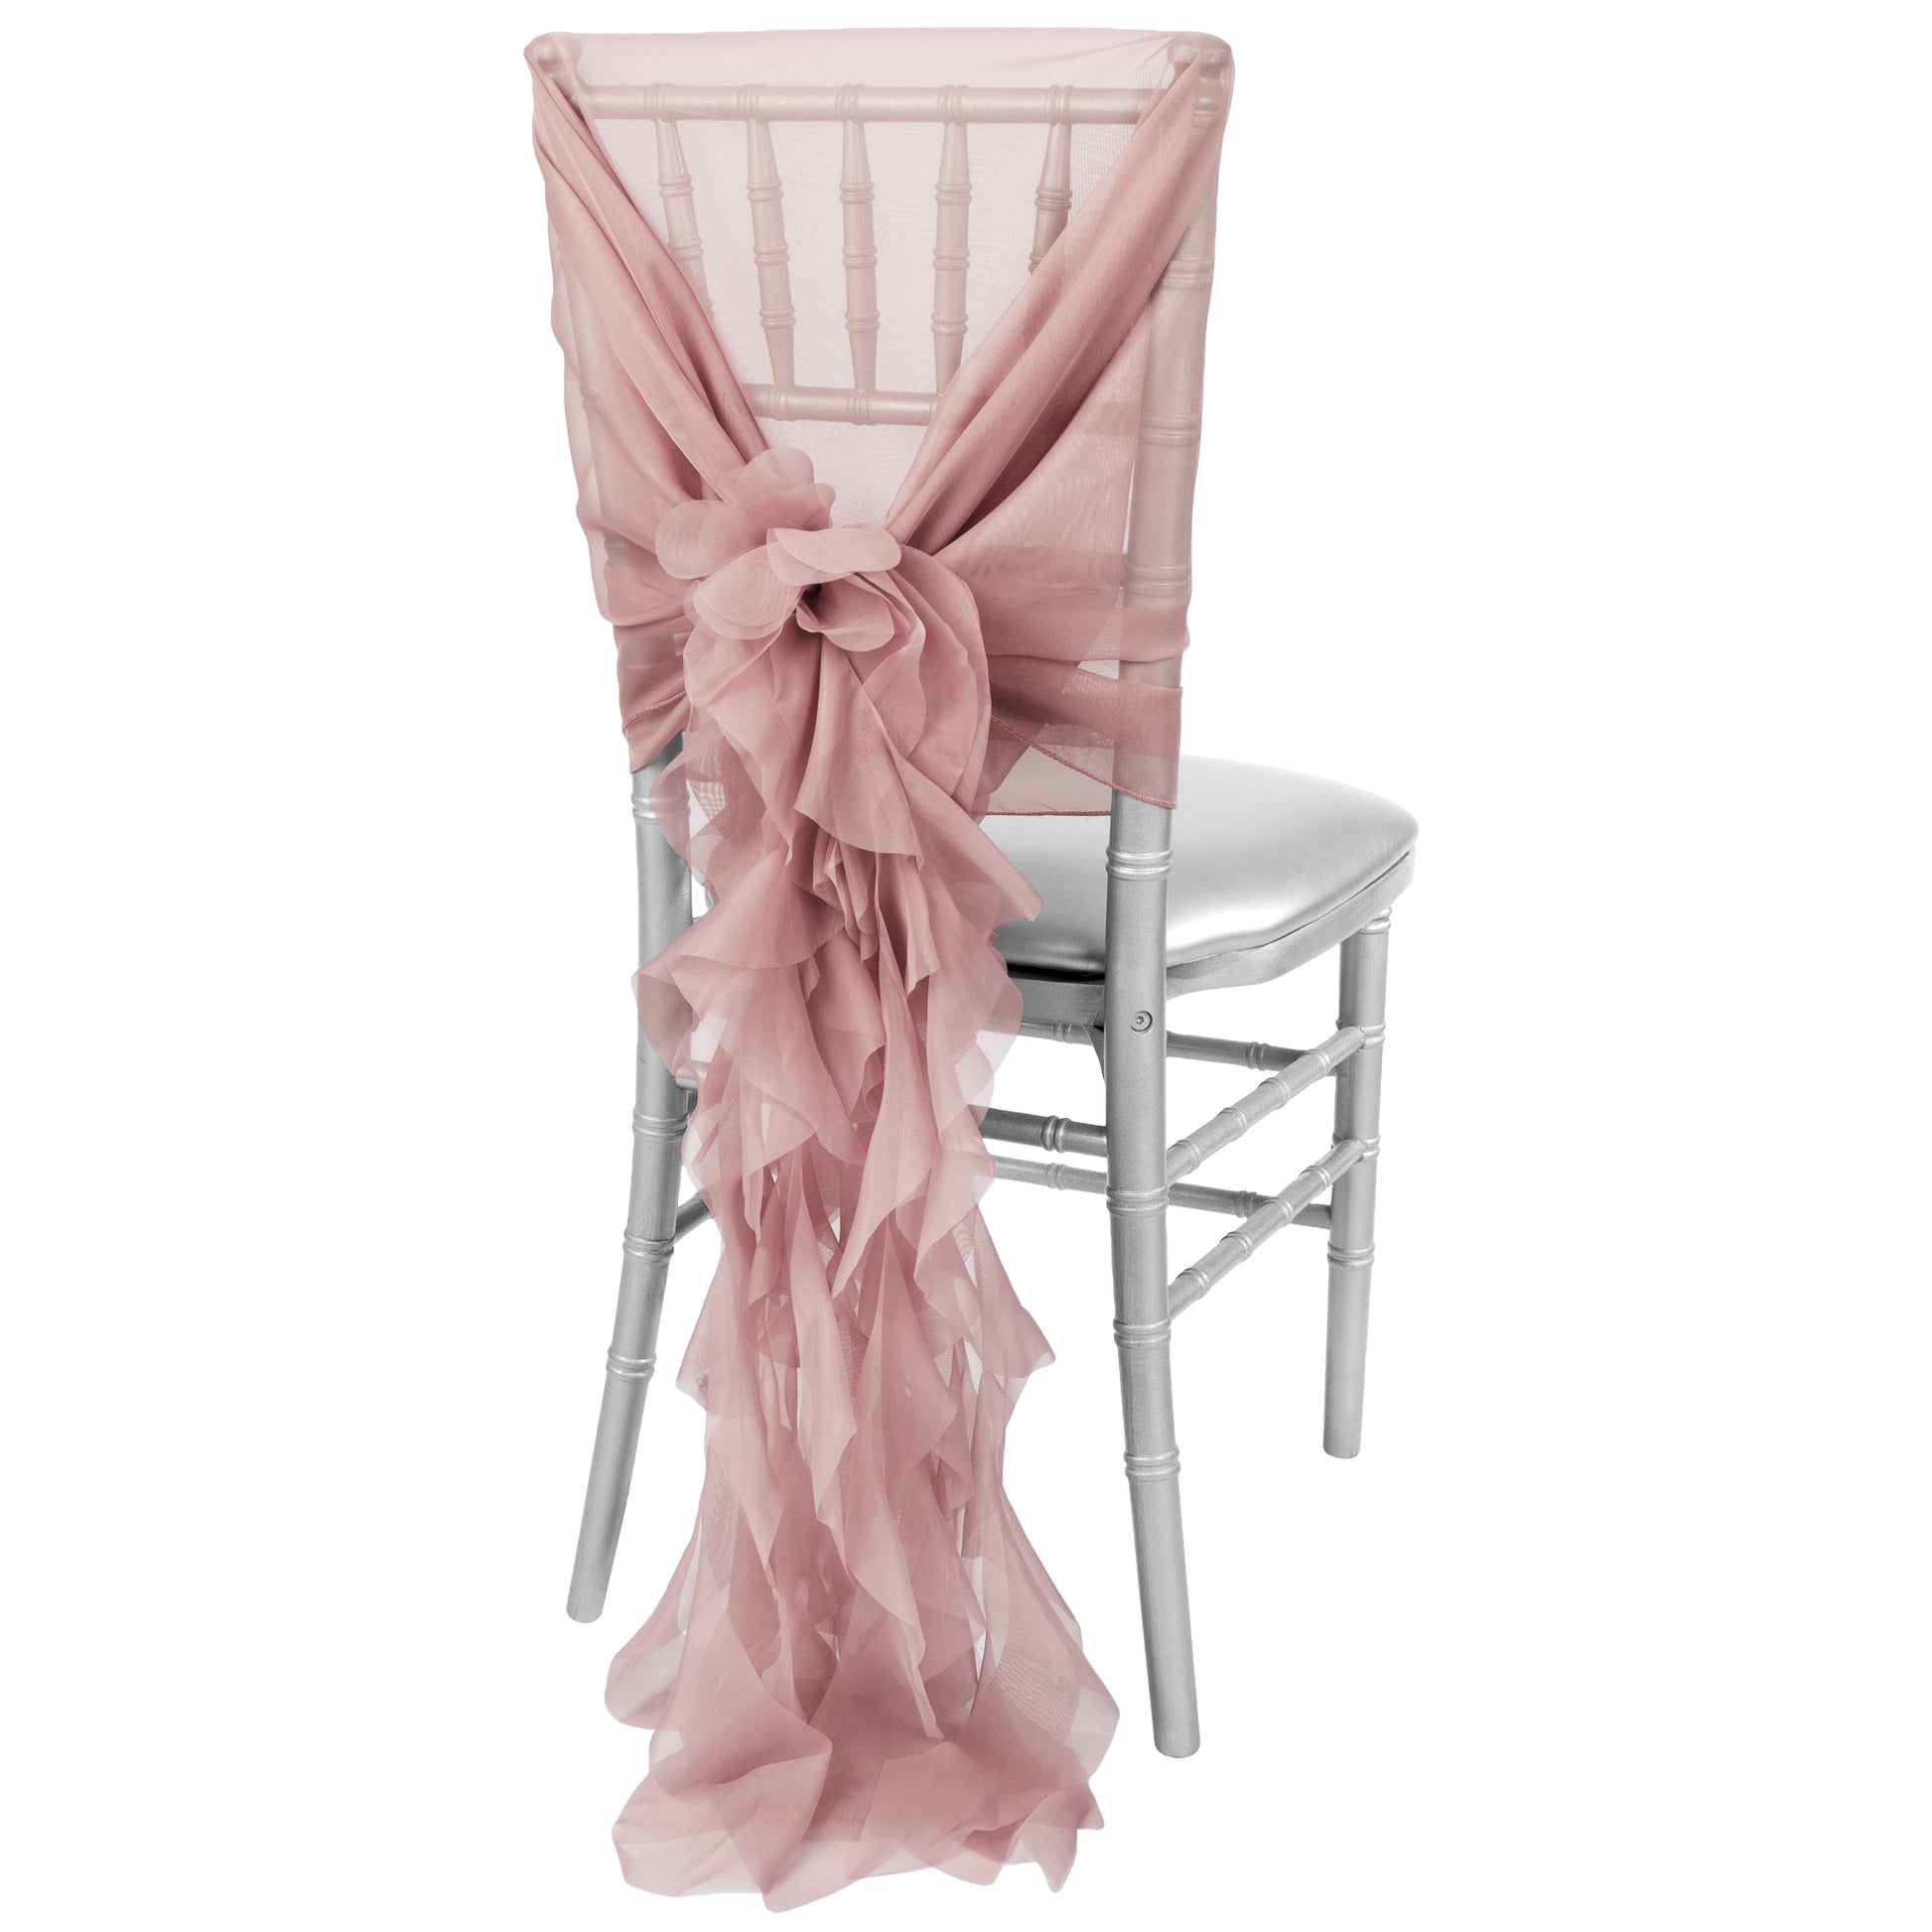 1 Set of Soft Curly Willow Ruffles Chair Sash & Cap - Dusty Rose/Mauve - CV Linens